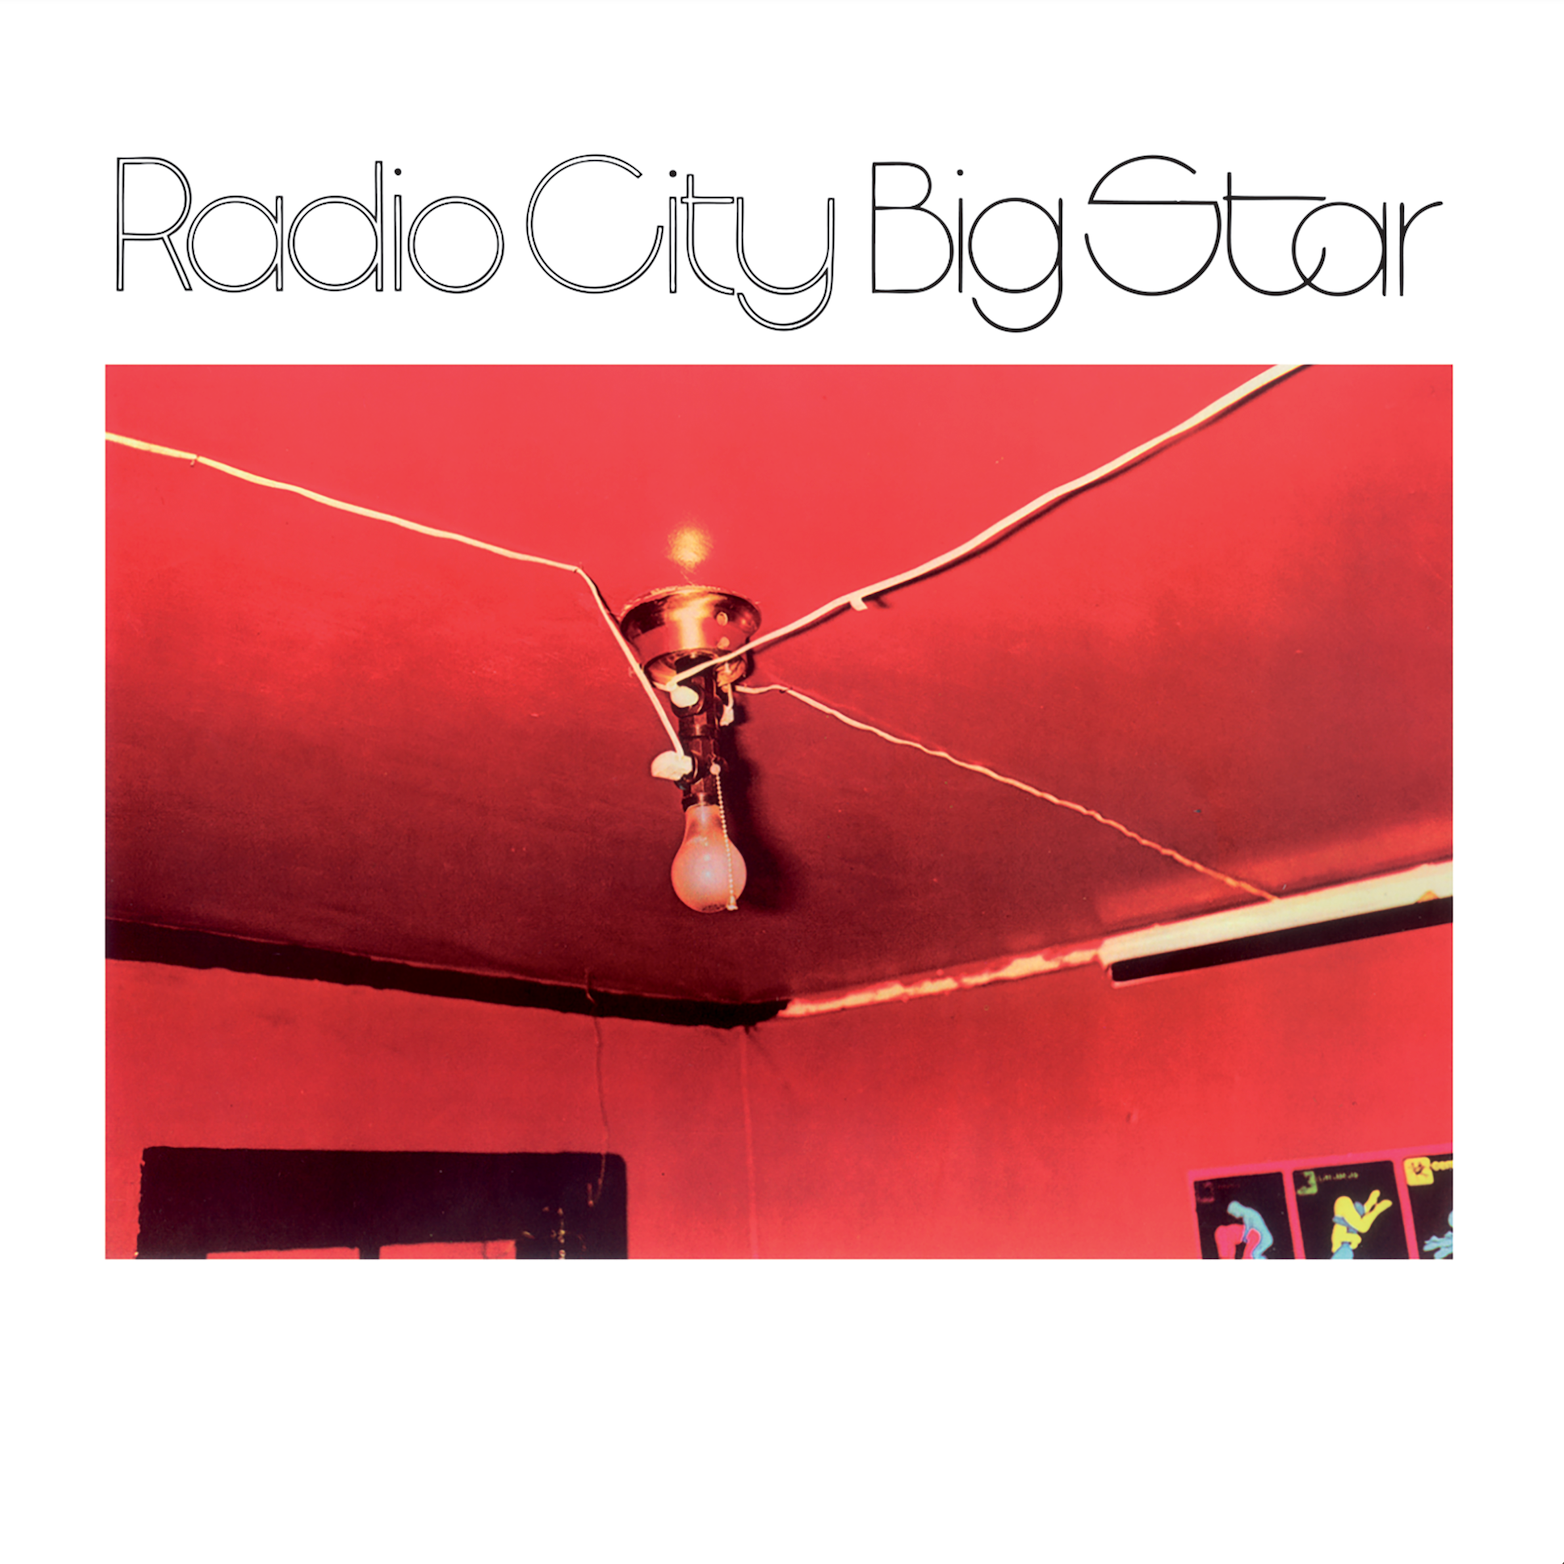 BIG STAR’S RADIO CITY (& MORE) INTERNATIONAL TOUR CELEBRATING 50 YEARS OF THE BAND’S SOPHOMORE ALBUM